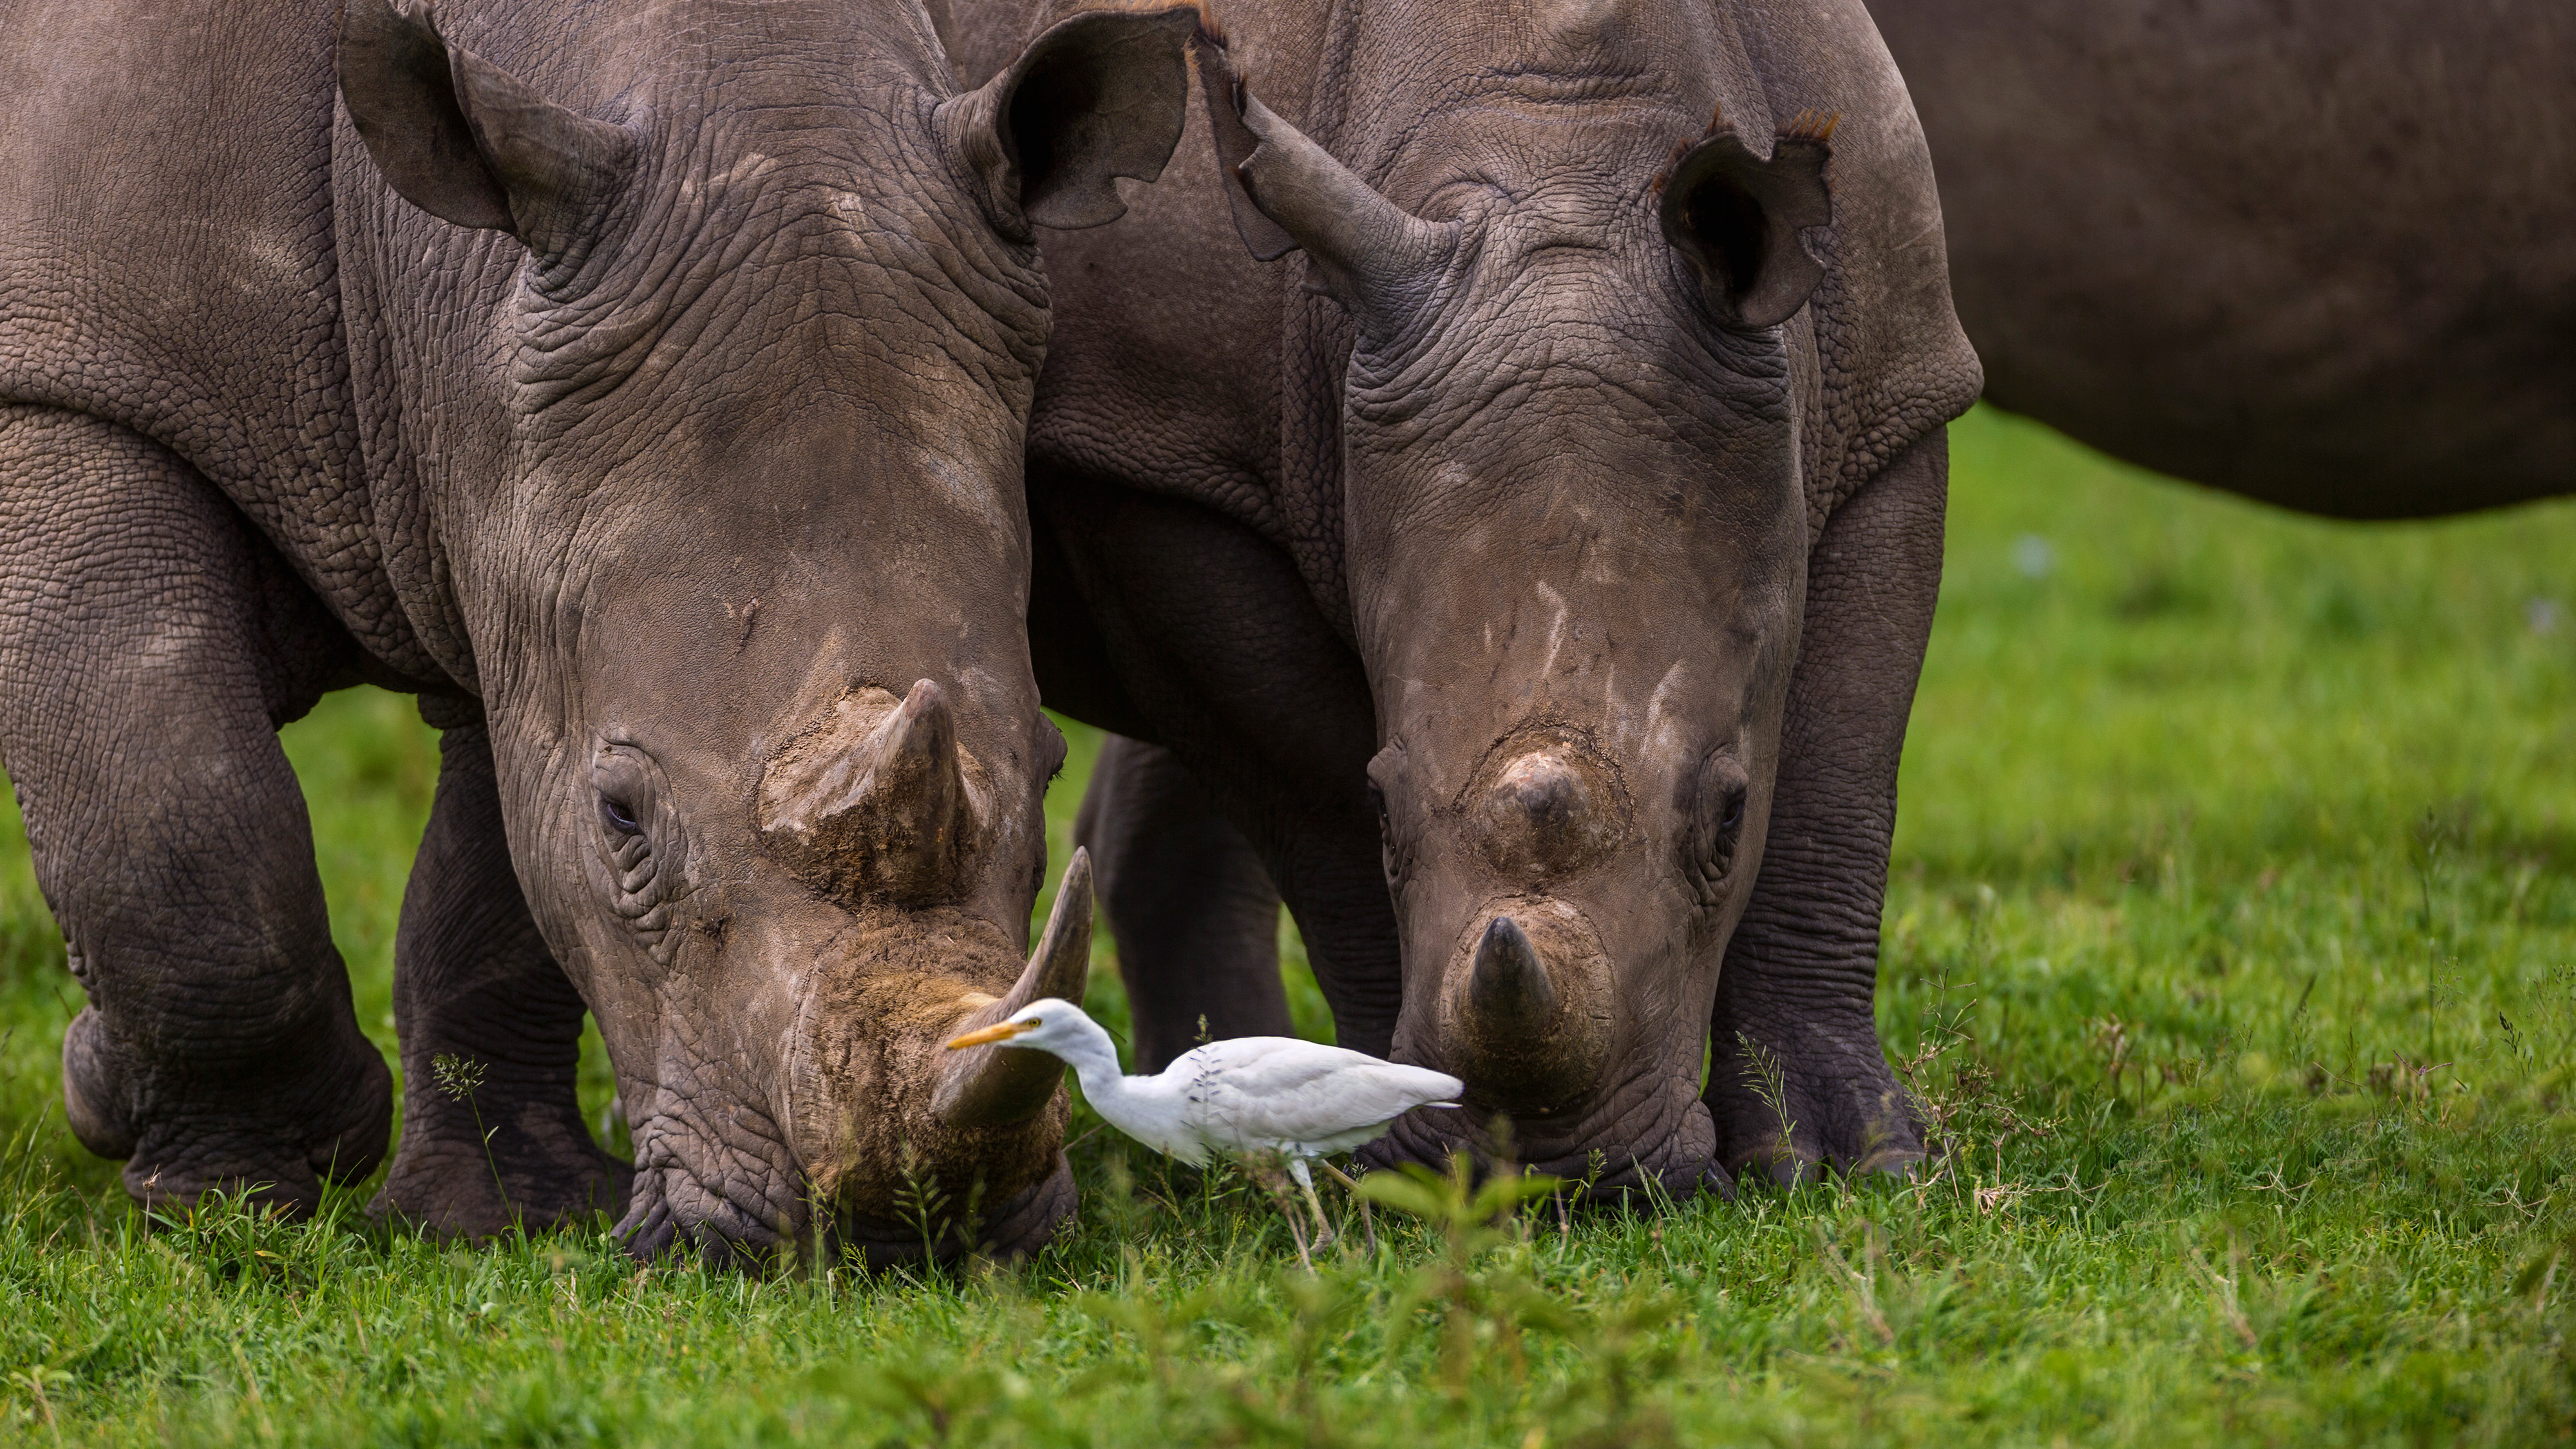 Two Sumatran rhinos